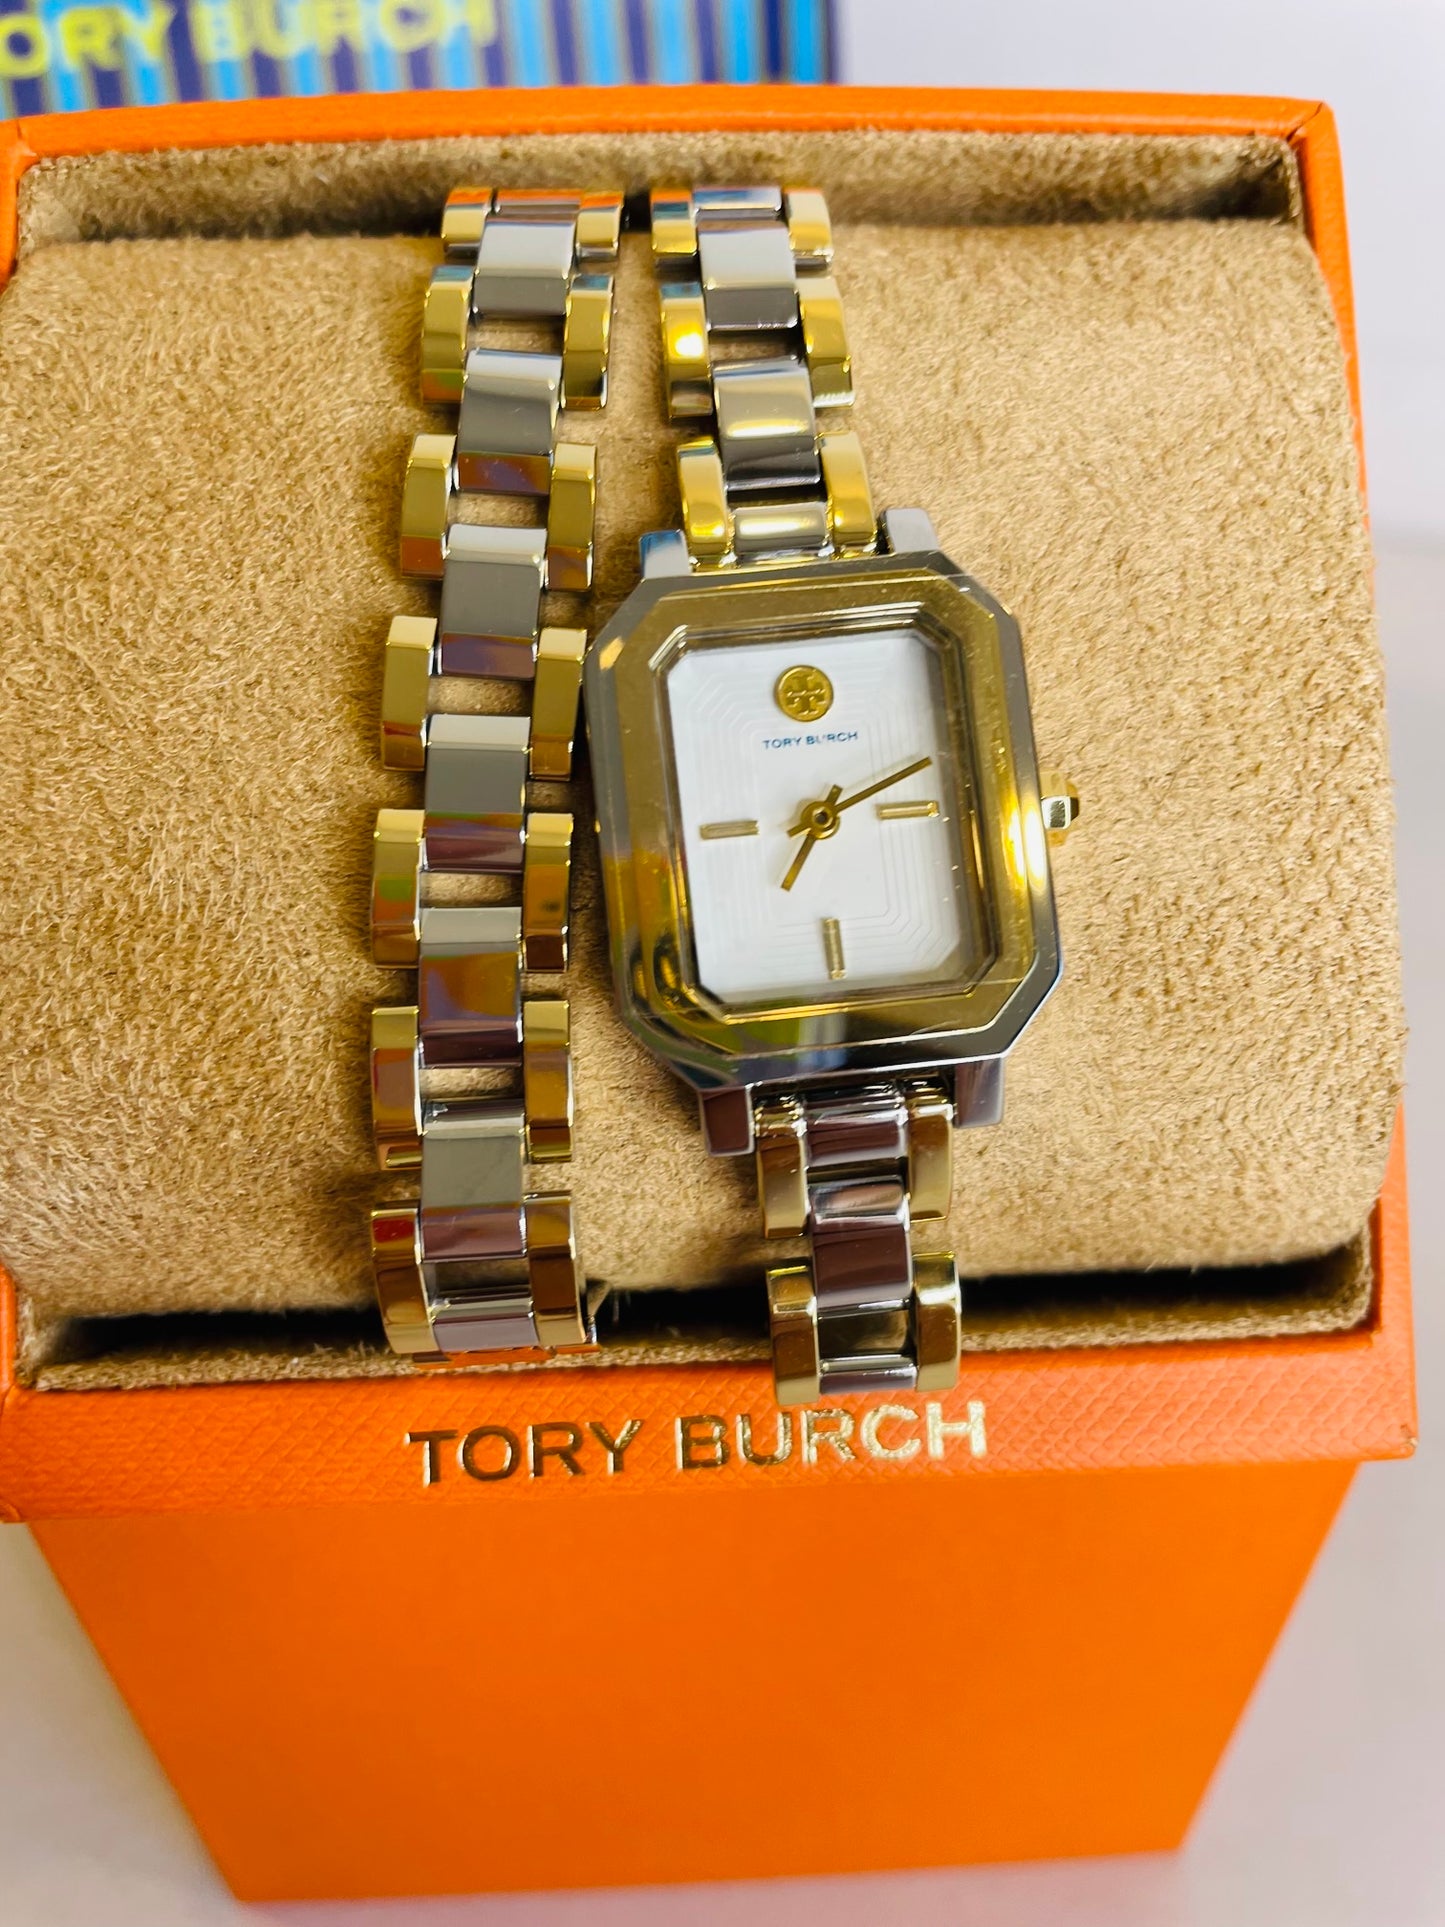 Tory Burch watch set